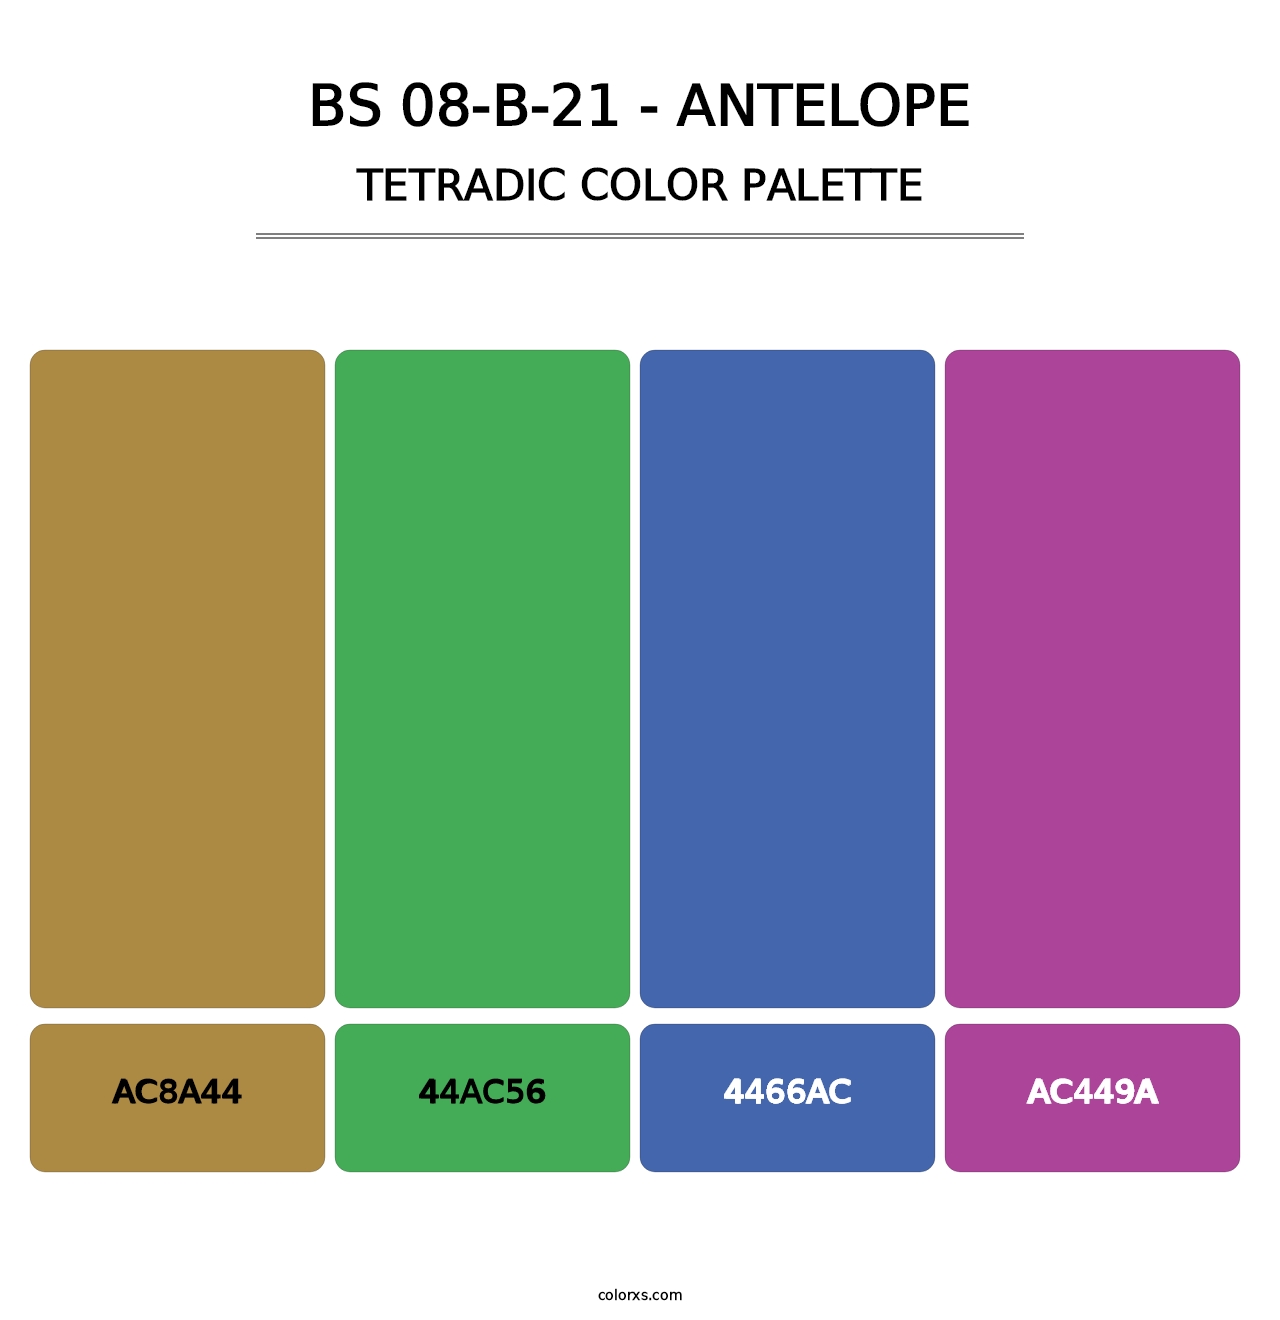 BS 08-B-21 - Antelope - Tetradic Color Palette